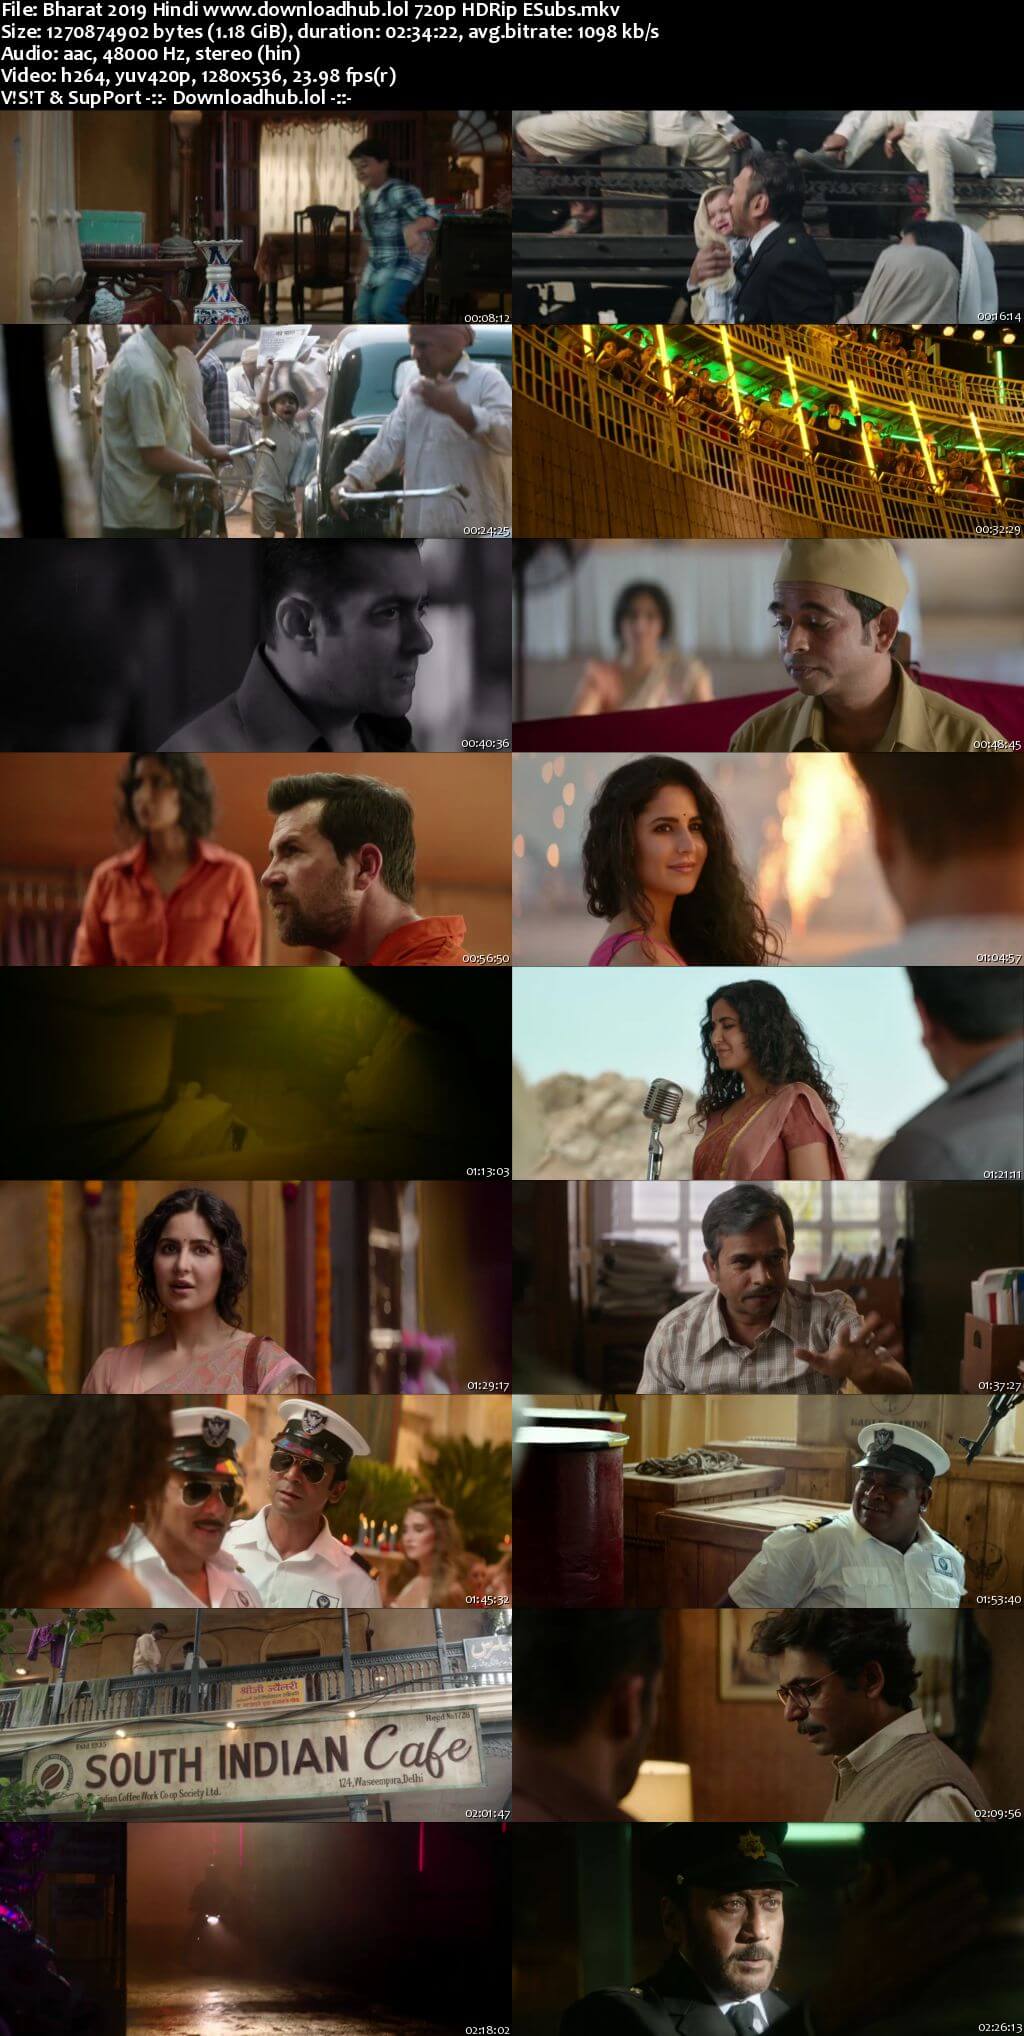 Bharat 2019 Hindi 720p HDRip ESubs